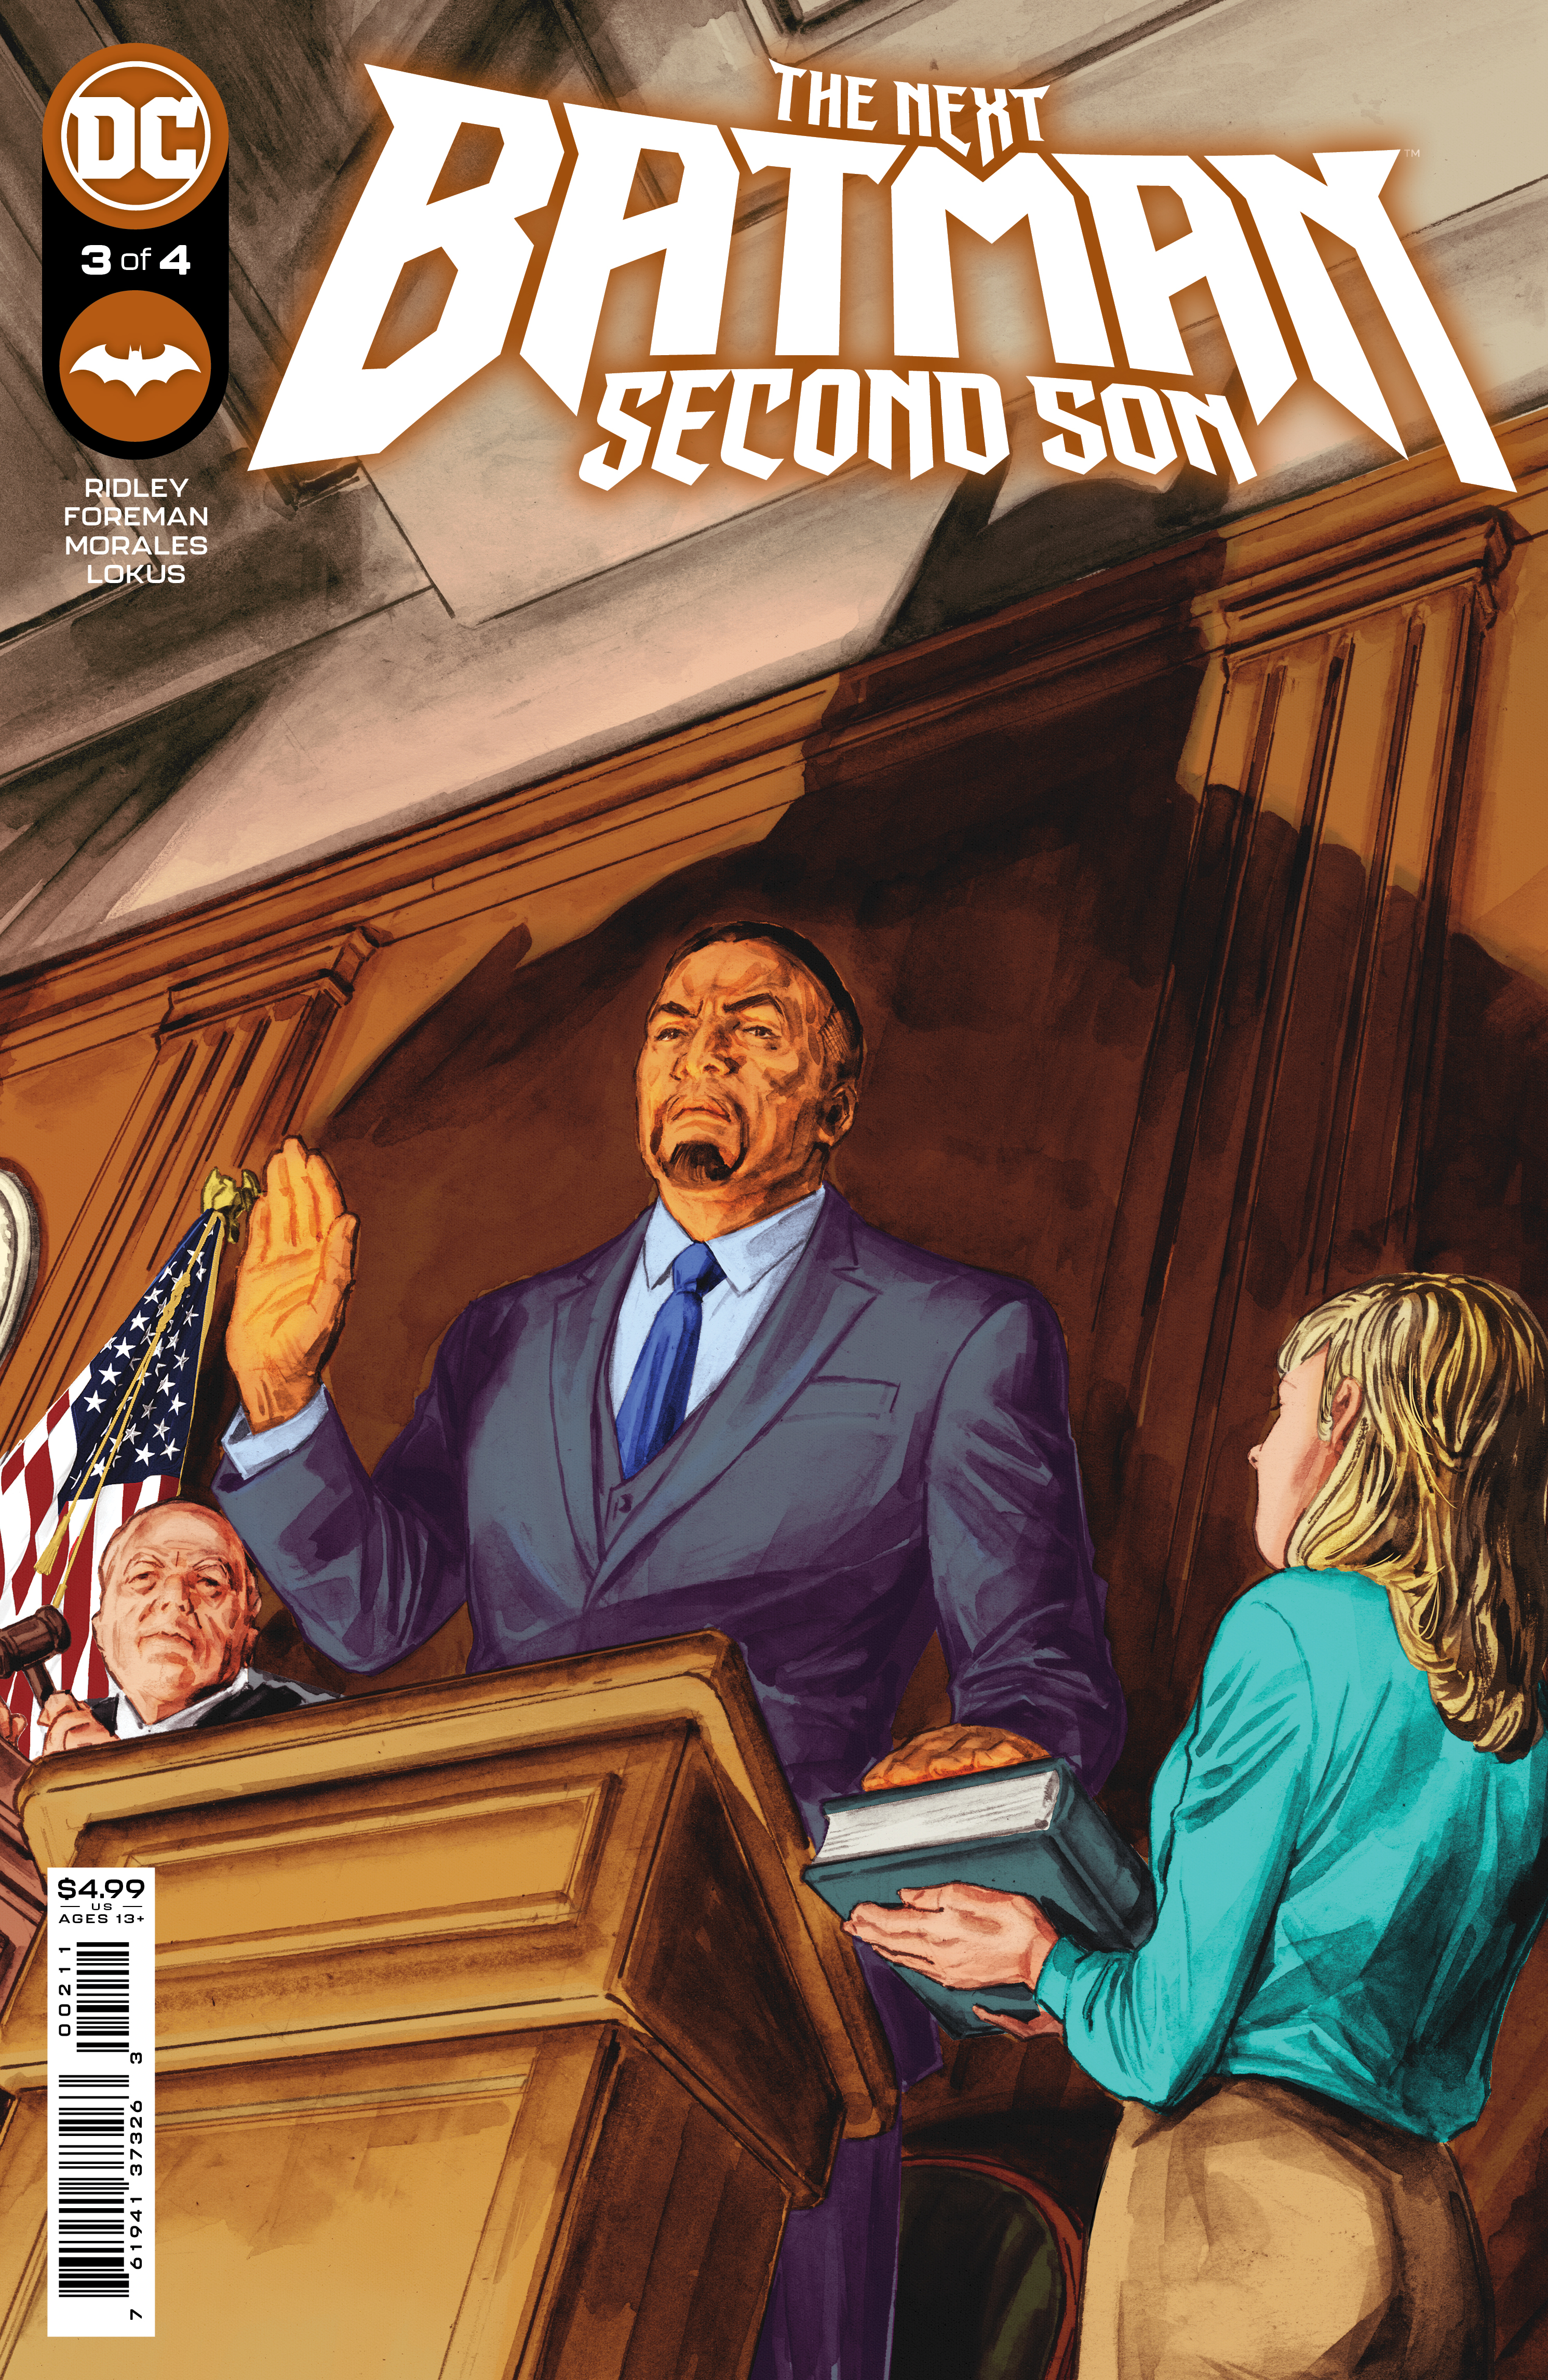 Next Batman Second Son #3 Cover A Doug Braithwaite (Of 4)